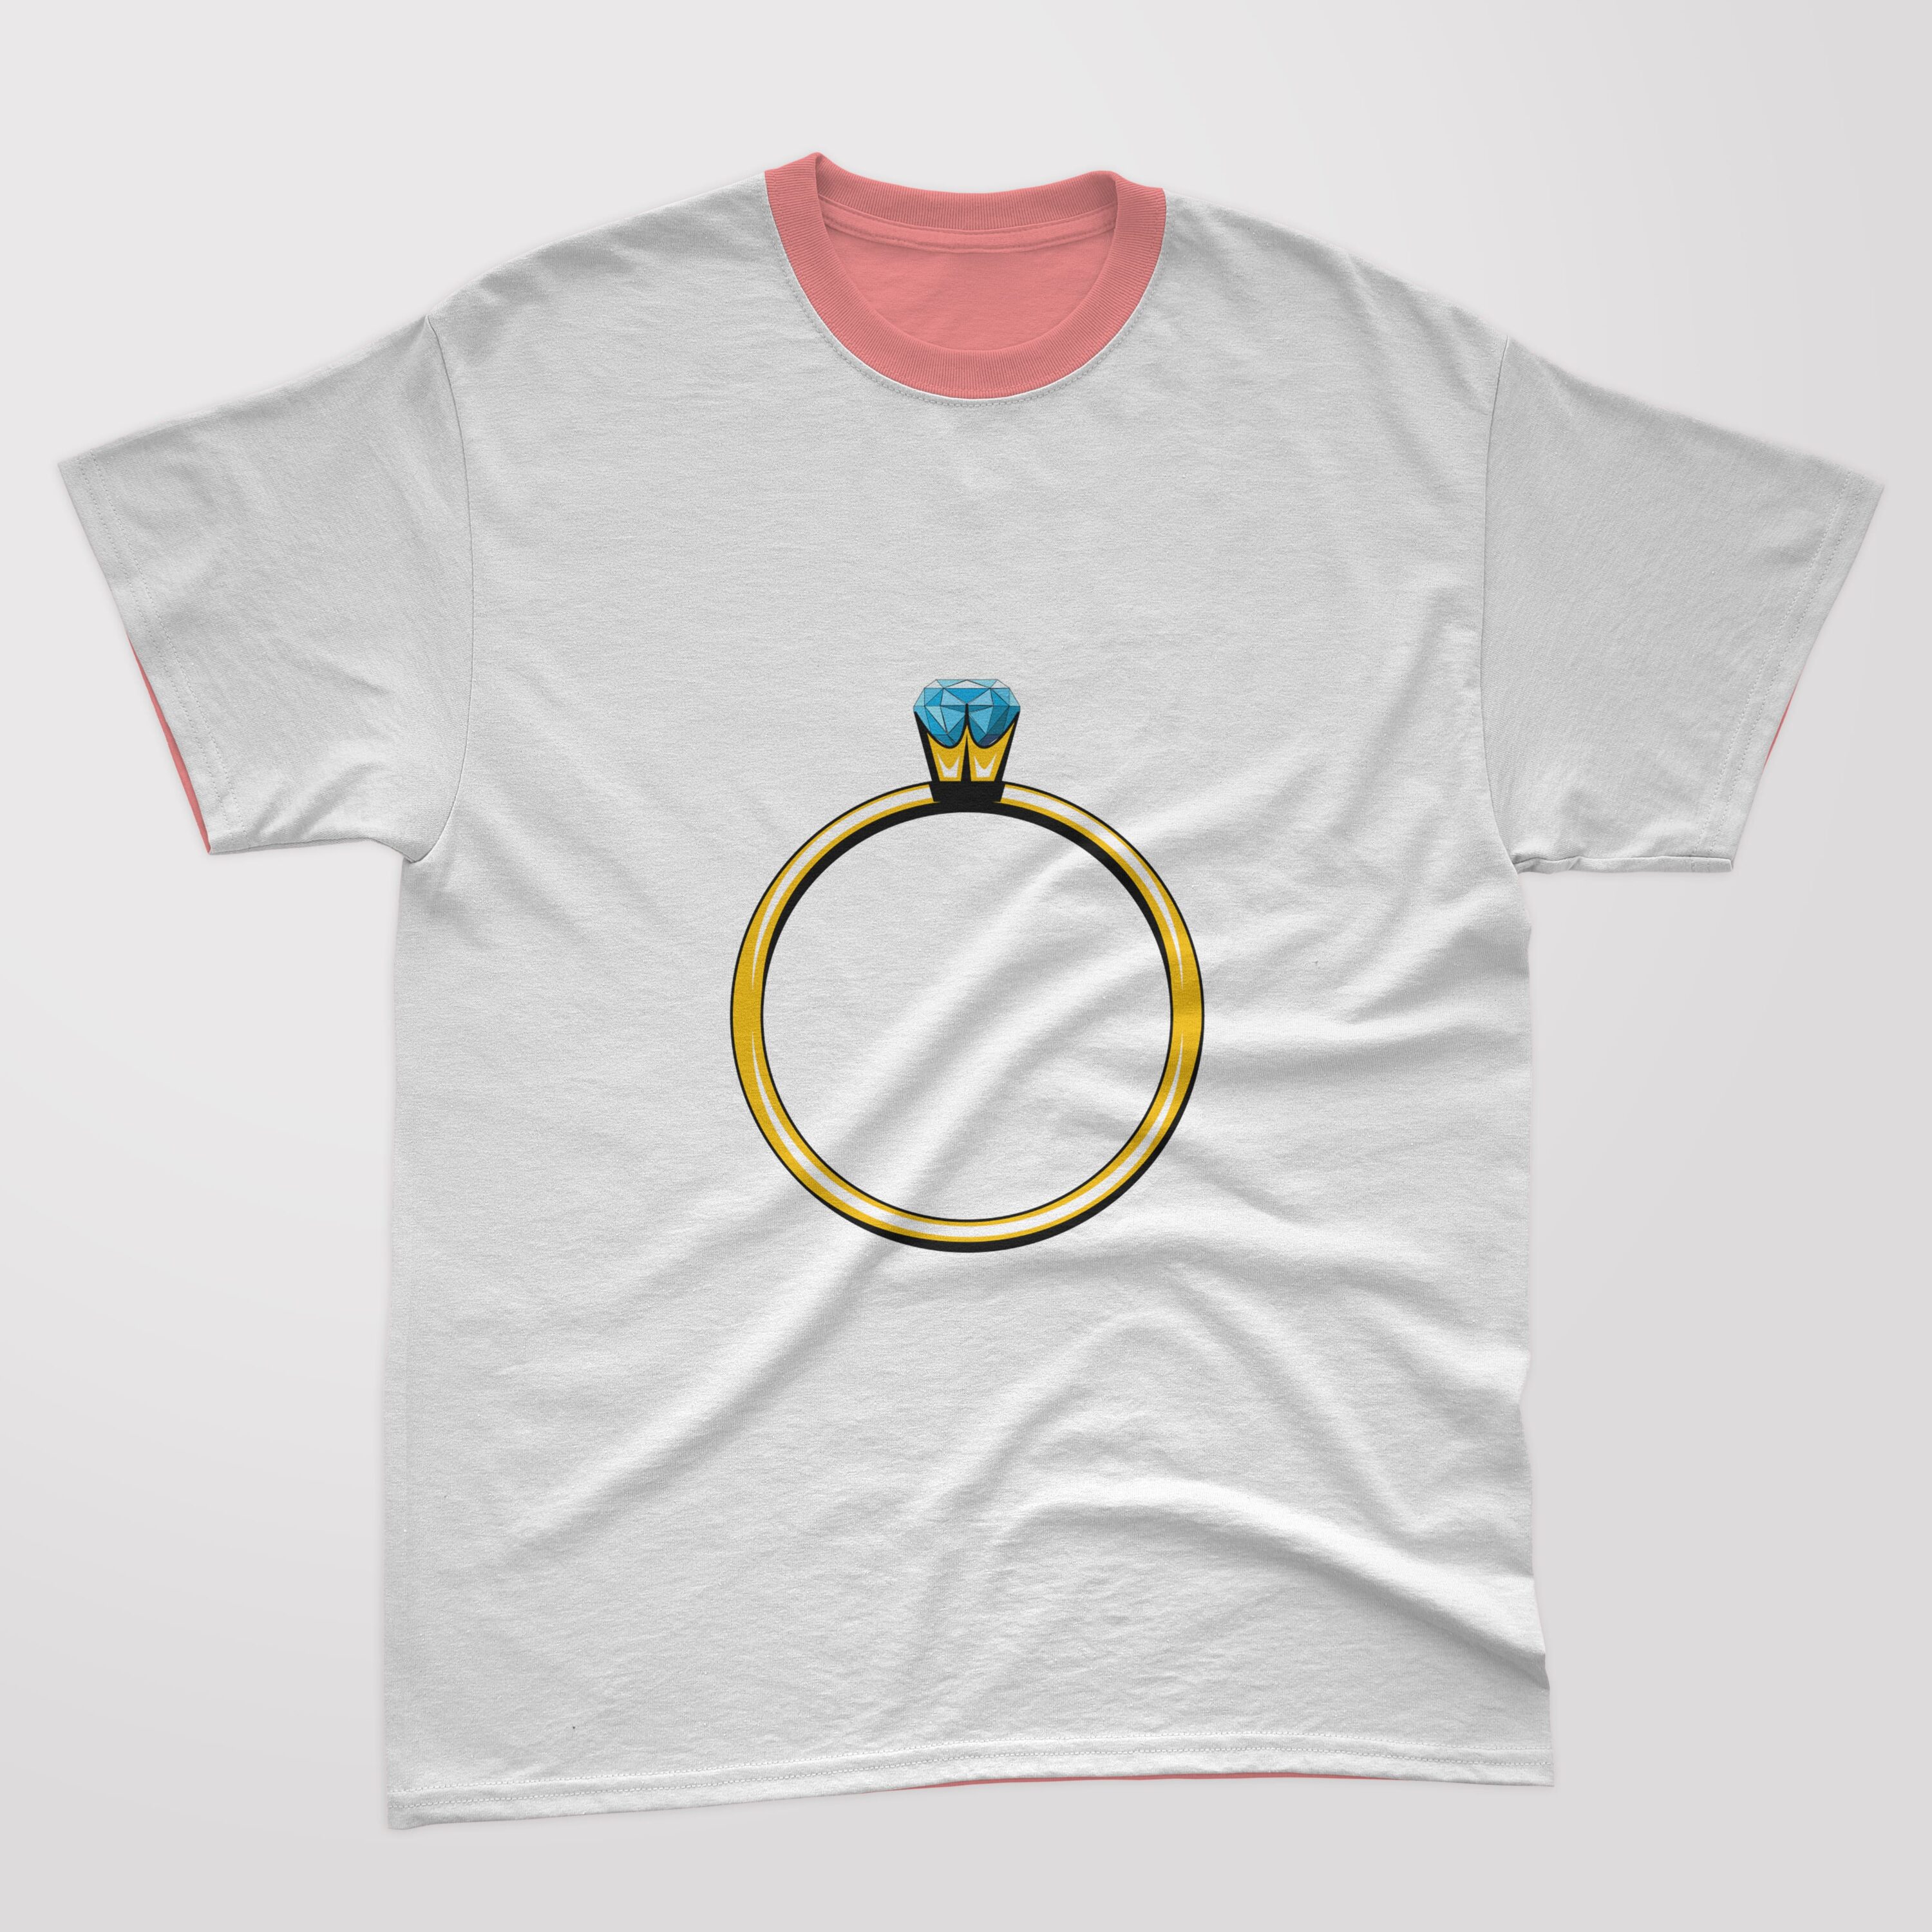 Image of T-shirt with elegant print of diamond ring.